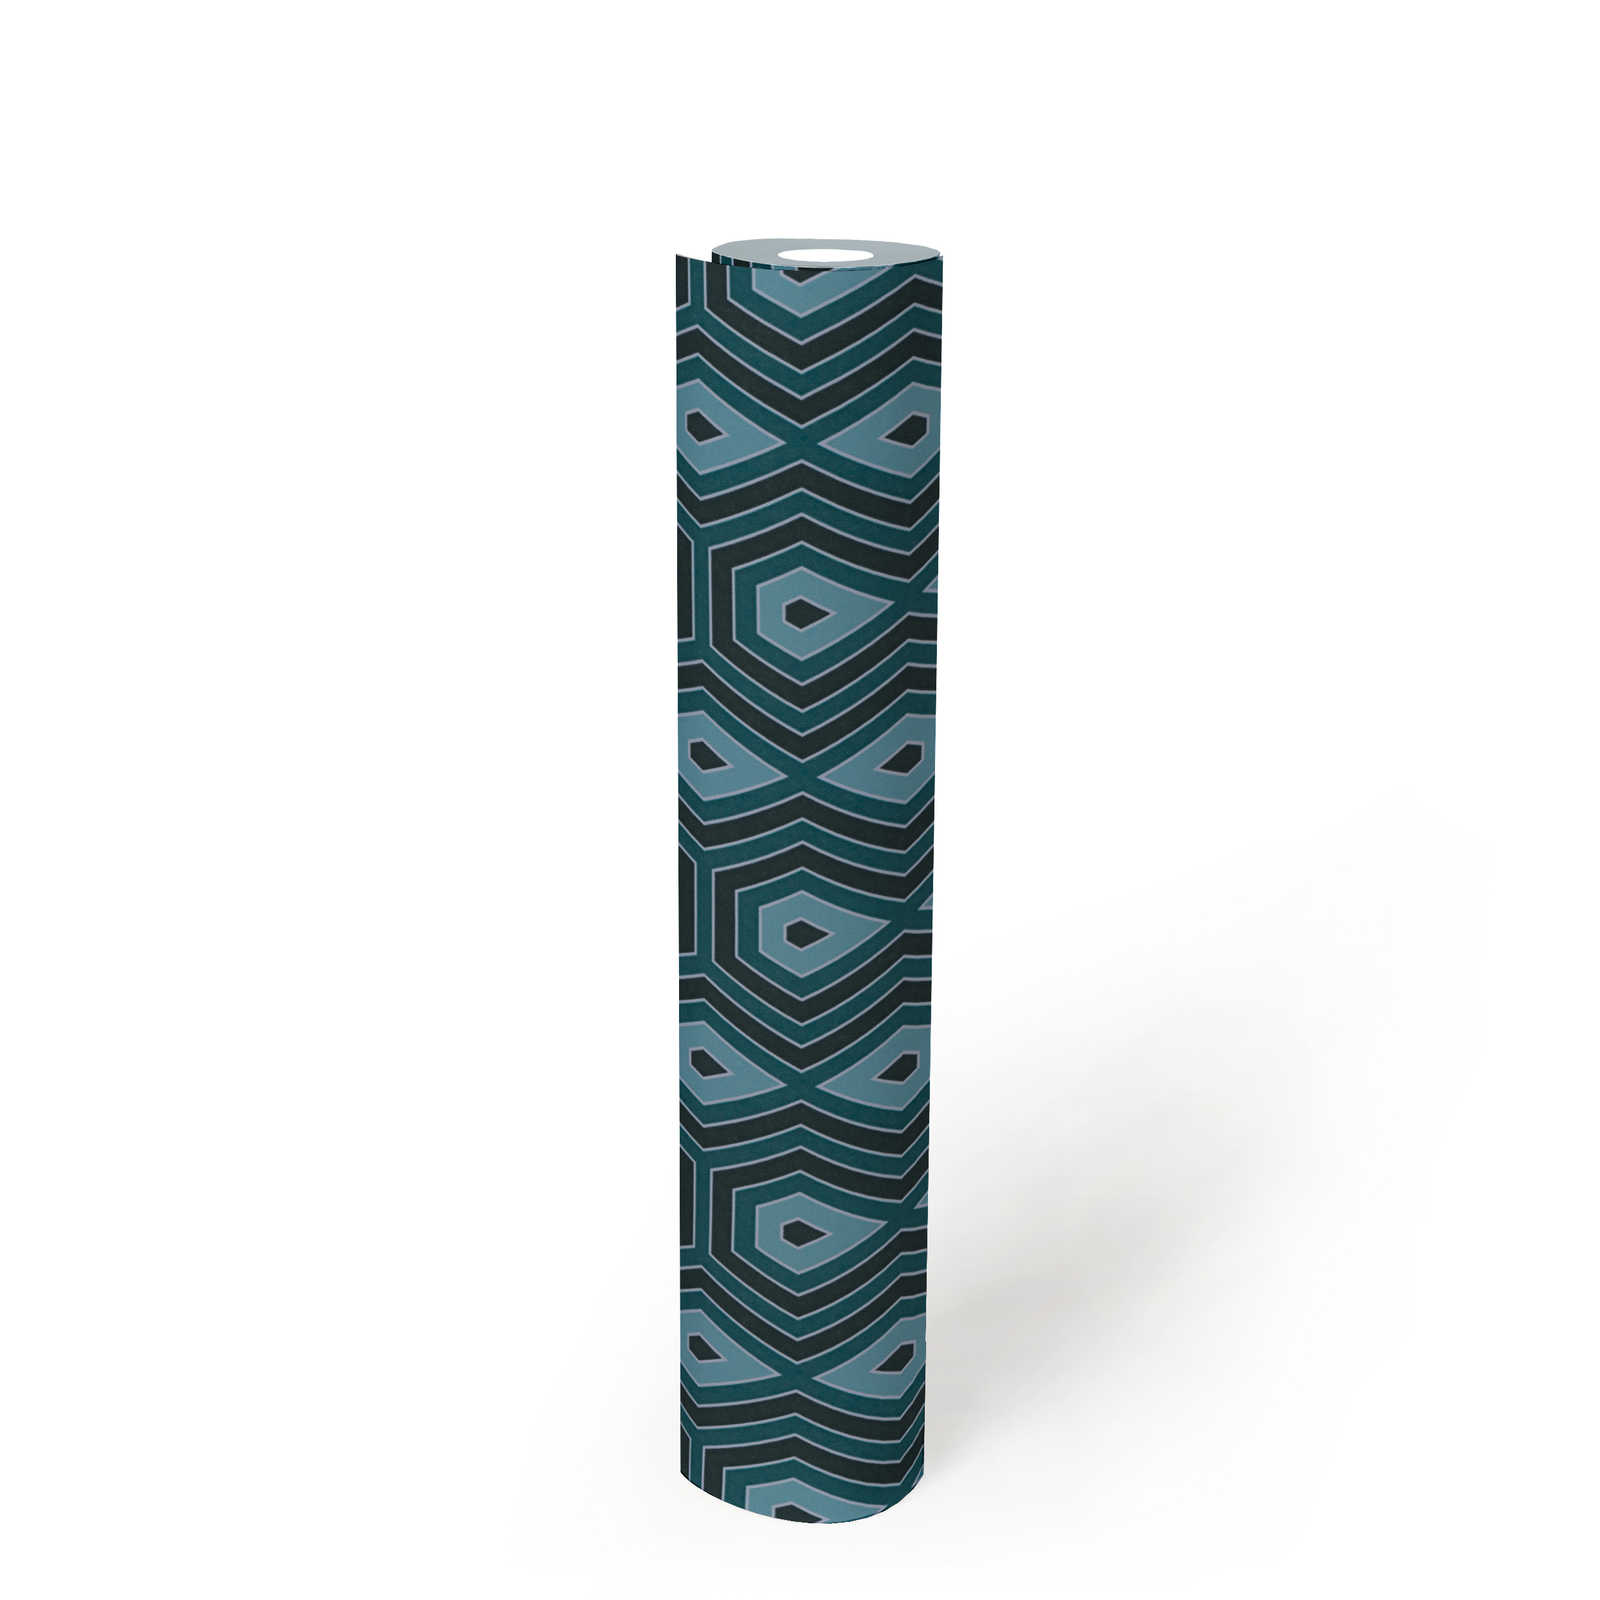             Tapete Türkis Grafik Diamant Muster im Retro Stil – Blau, Schwarz
        